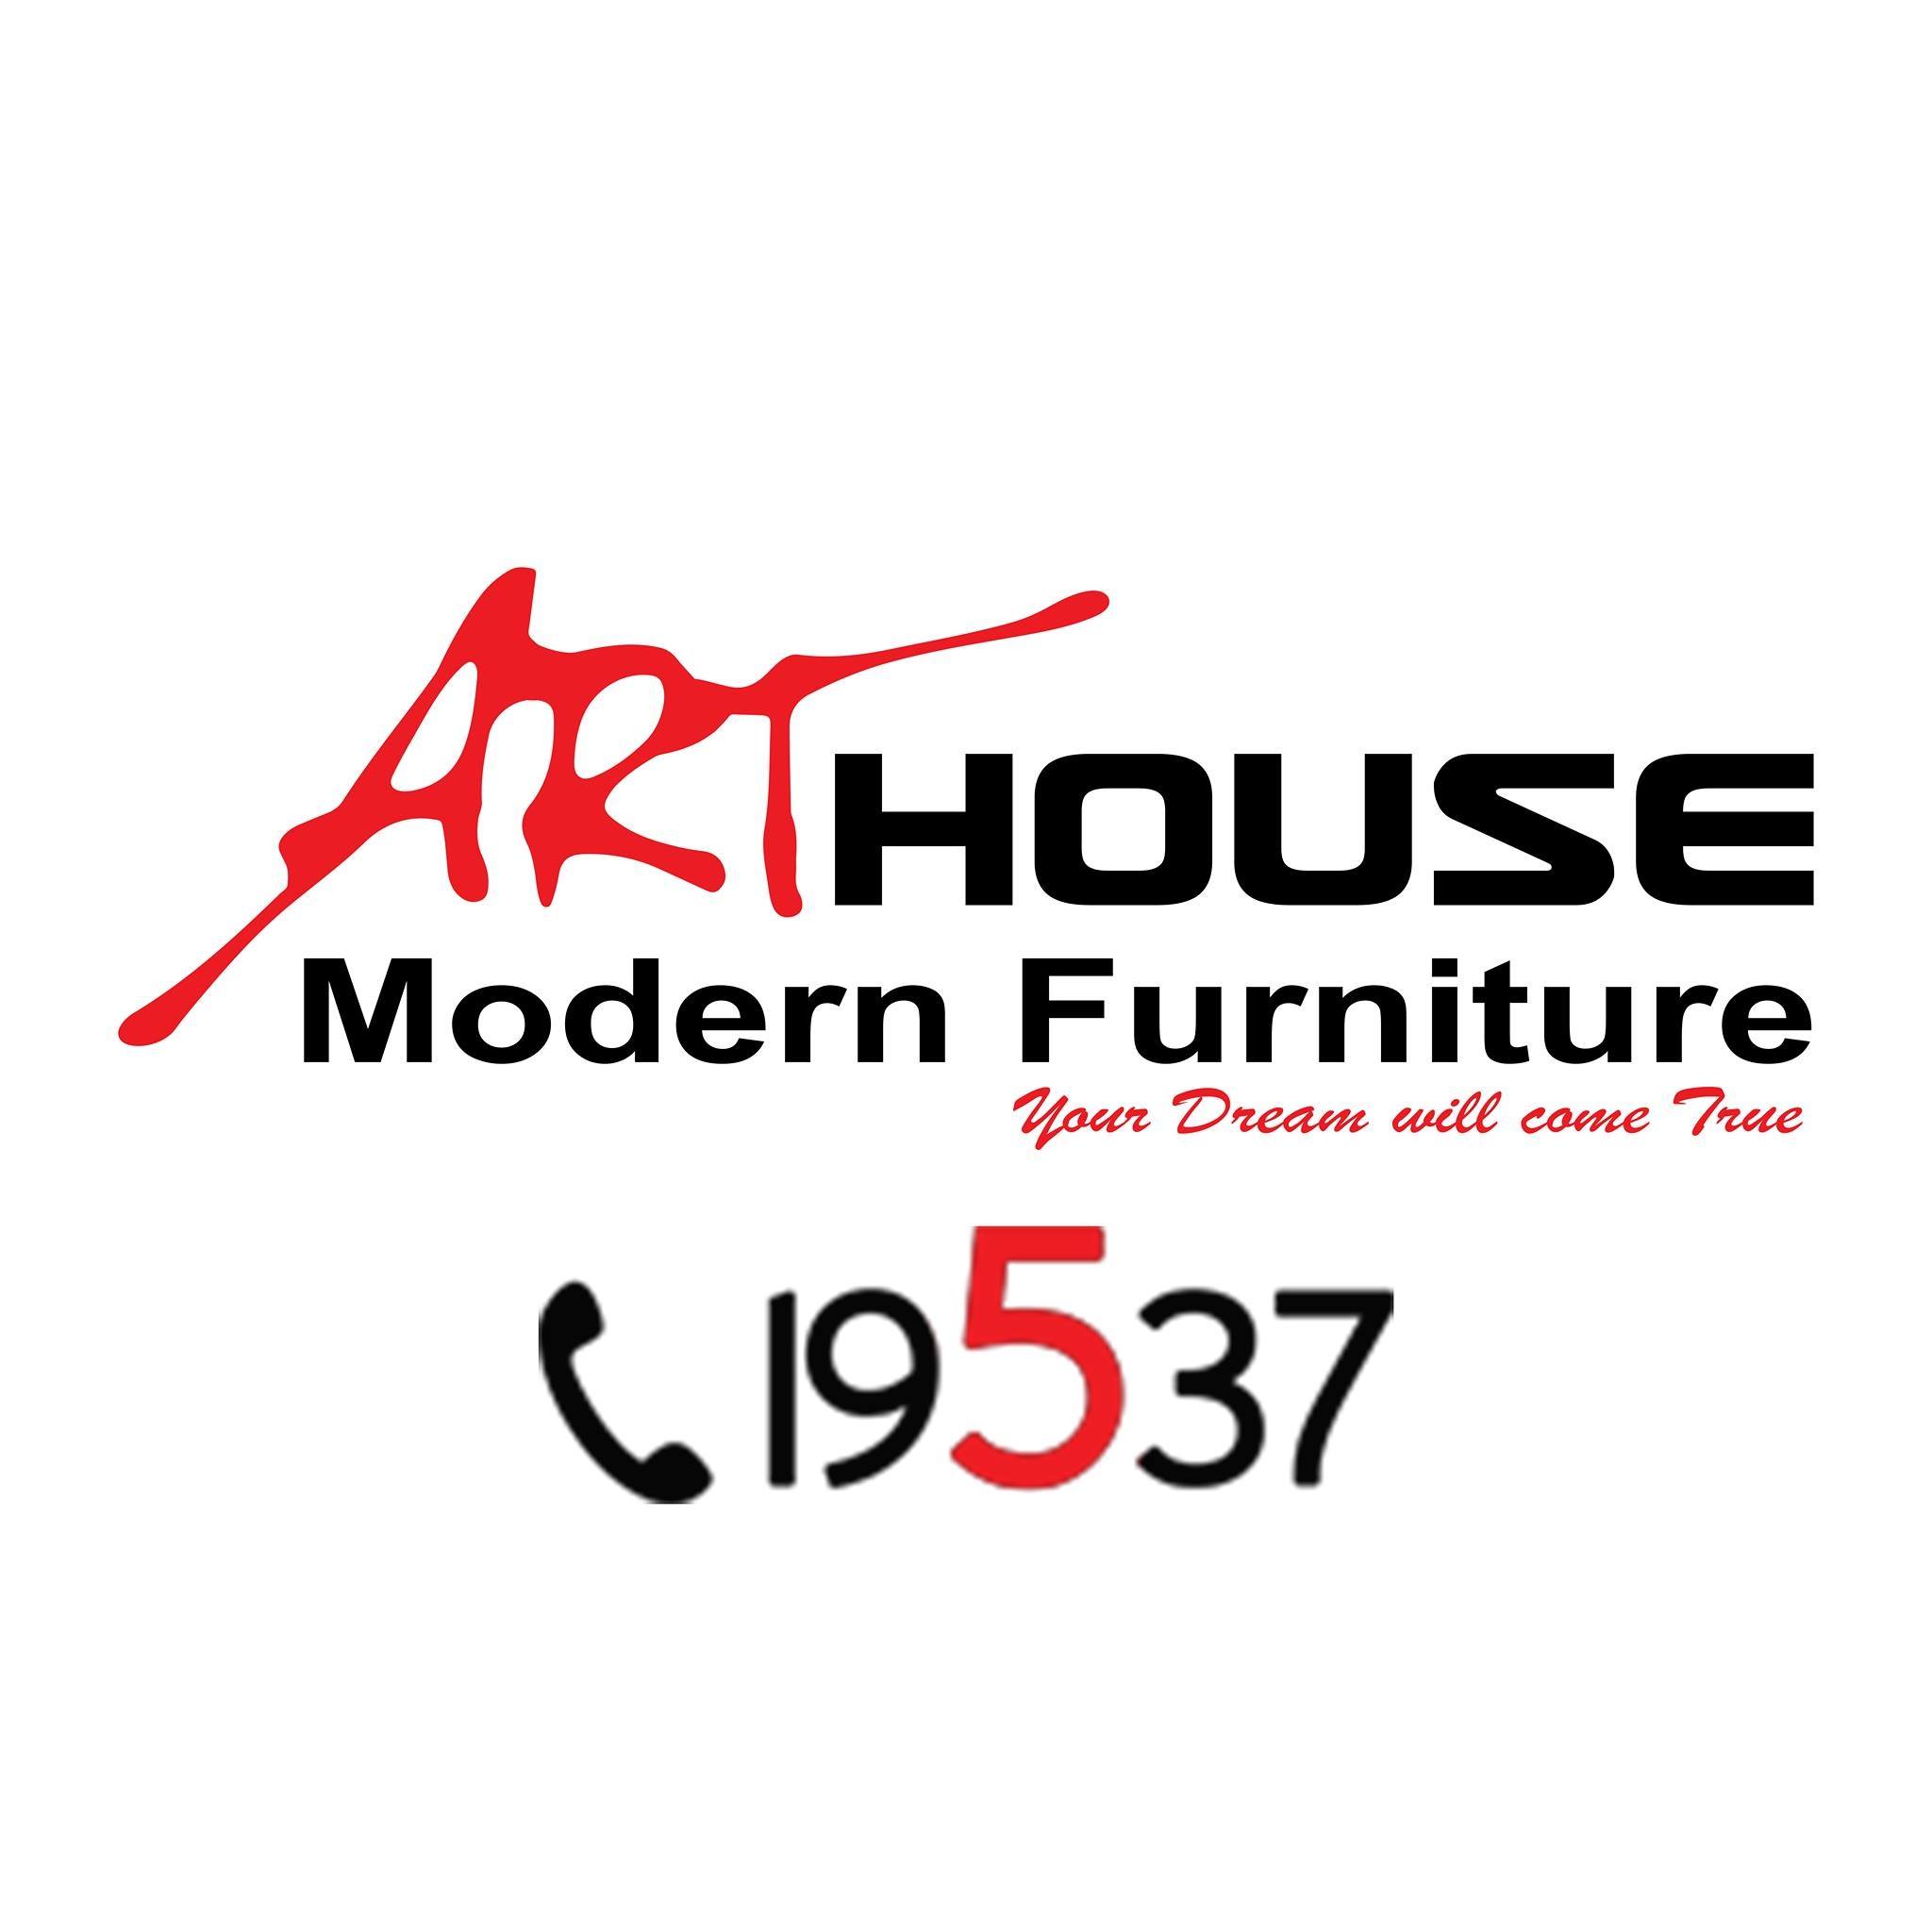 Art house Furniture Company